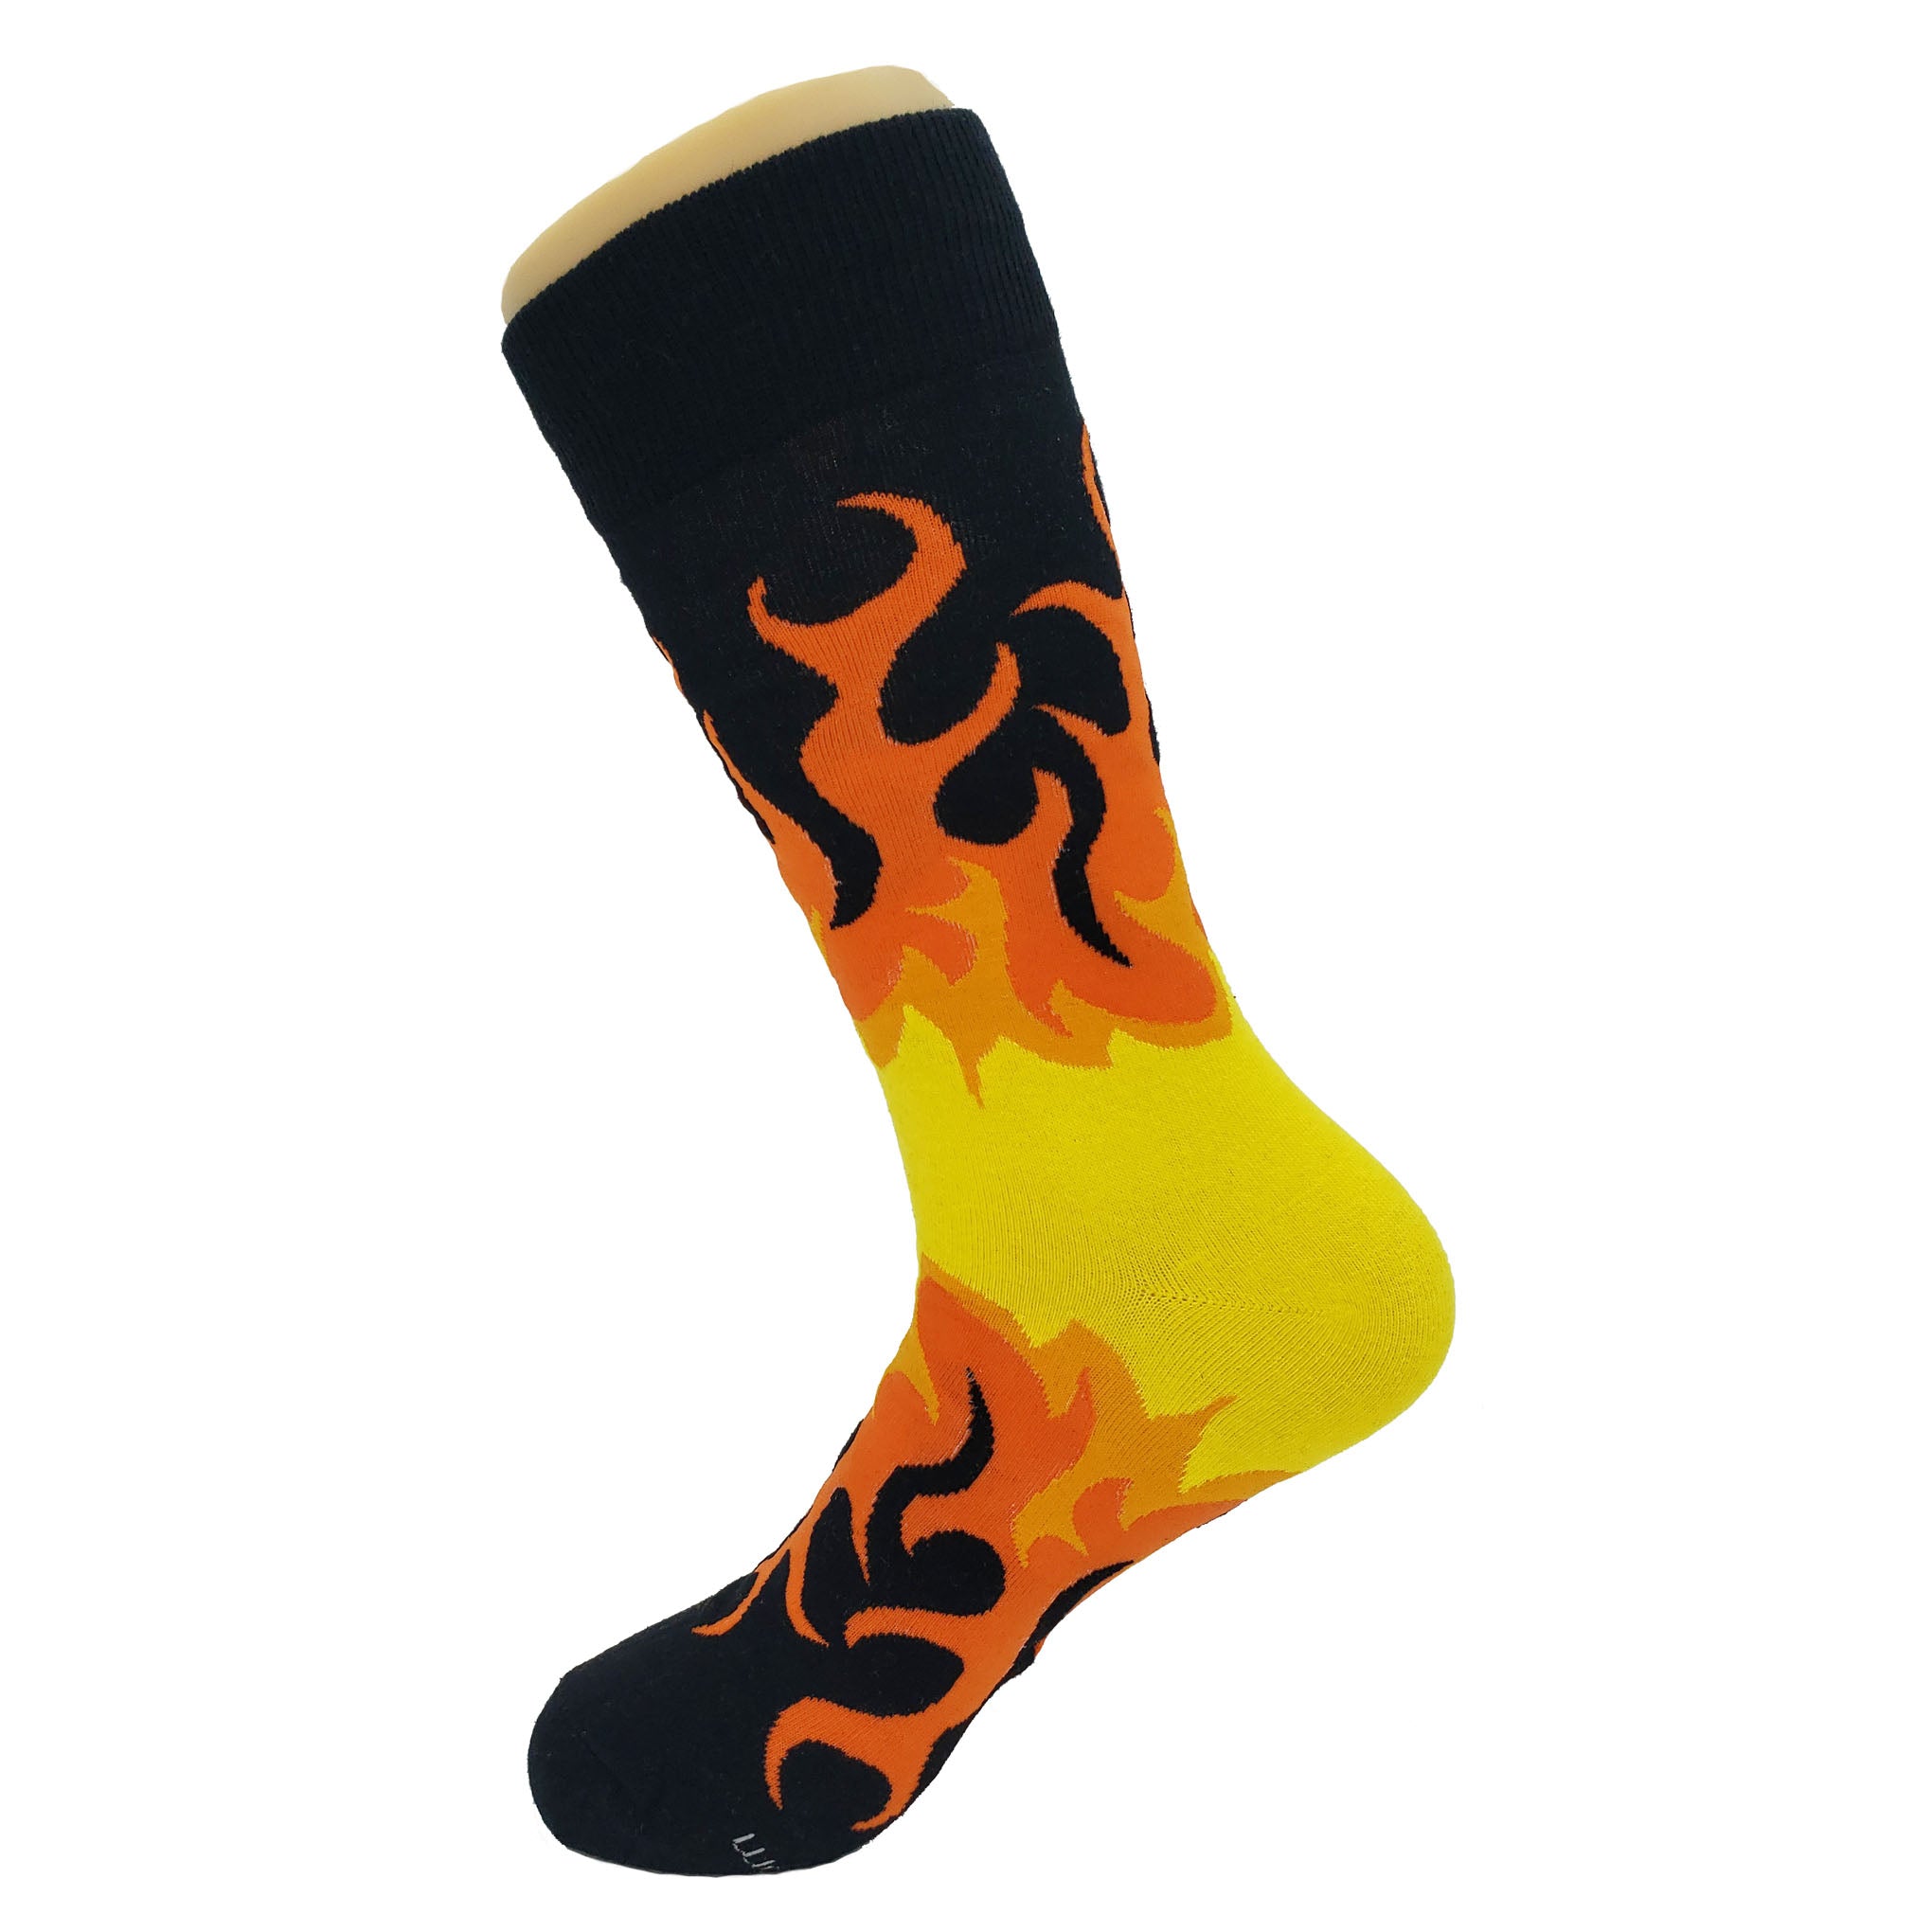 Fire Socks - Fun and Crazy Socks at Sockfly.com